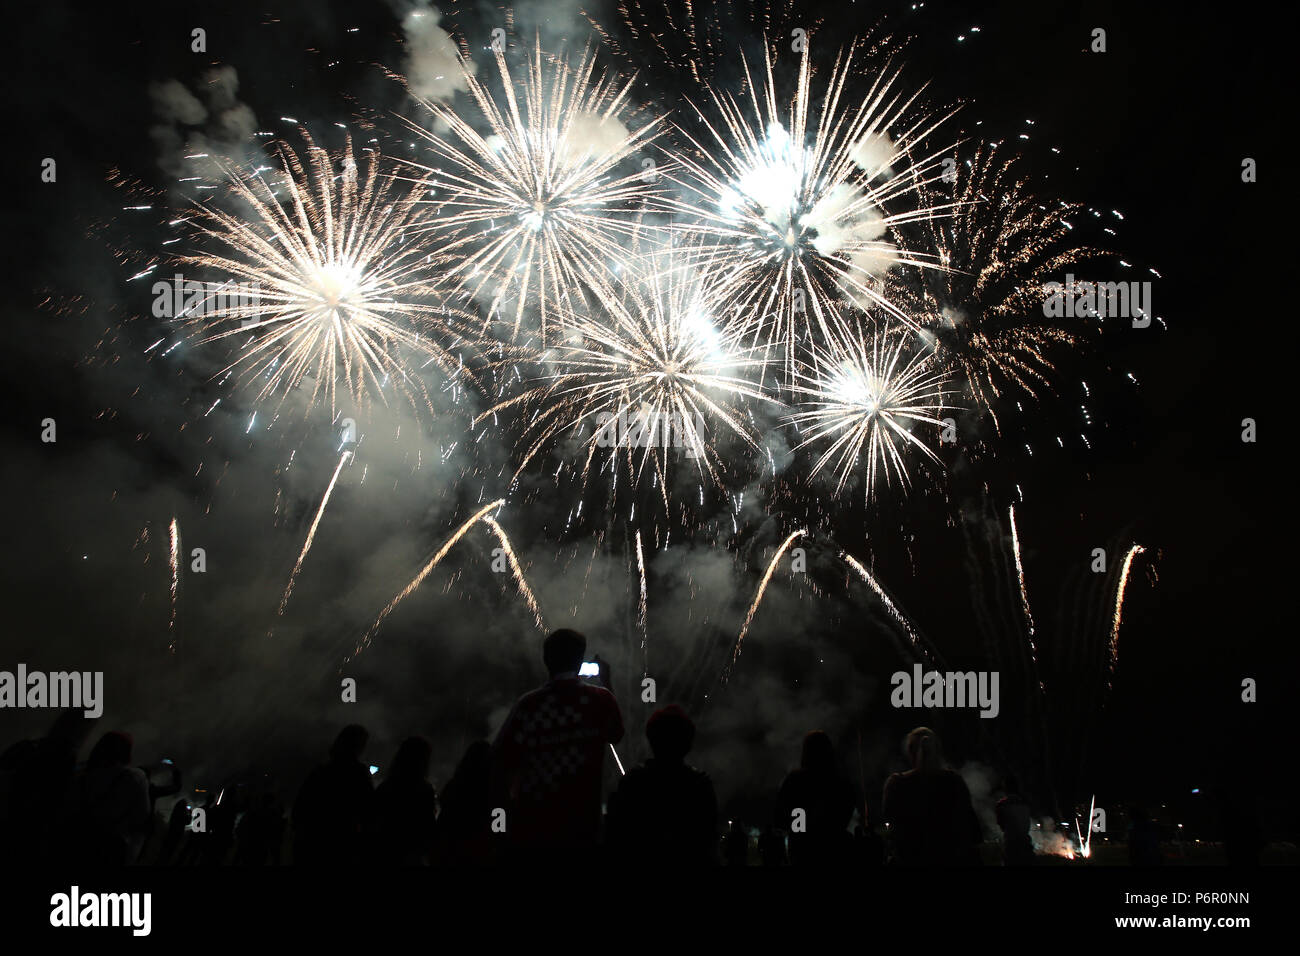 (180702) -- ZAGREB, July 2, 2018 (Xinhua) -- Fireworks light up the sky during the 18th International Fireworks Festival at Bundek Lake in Zagreb, Croatia, on July 1, 2018. (Xinhua/Sanjin Strukic) (jmmn) Stock Photo